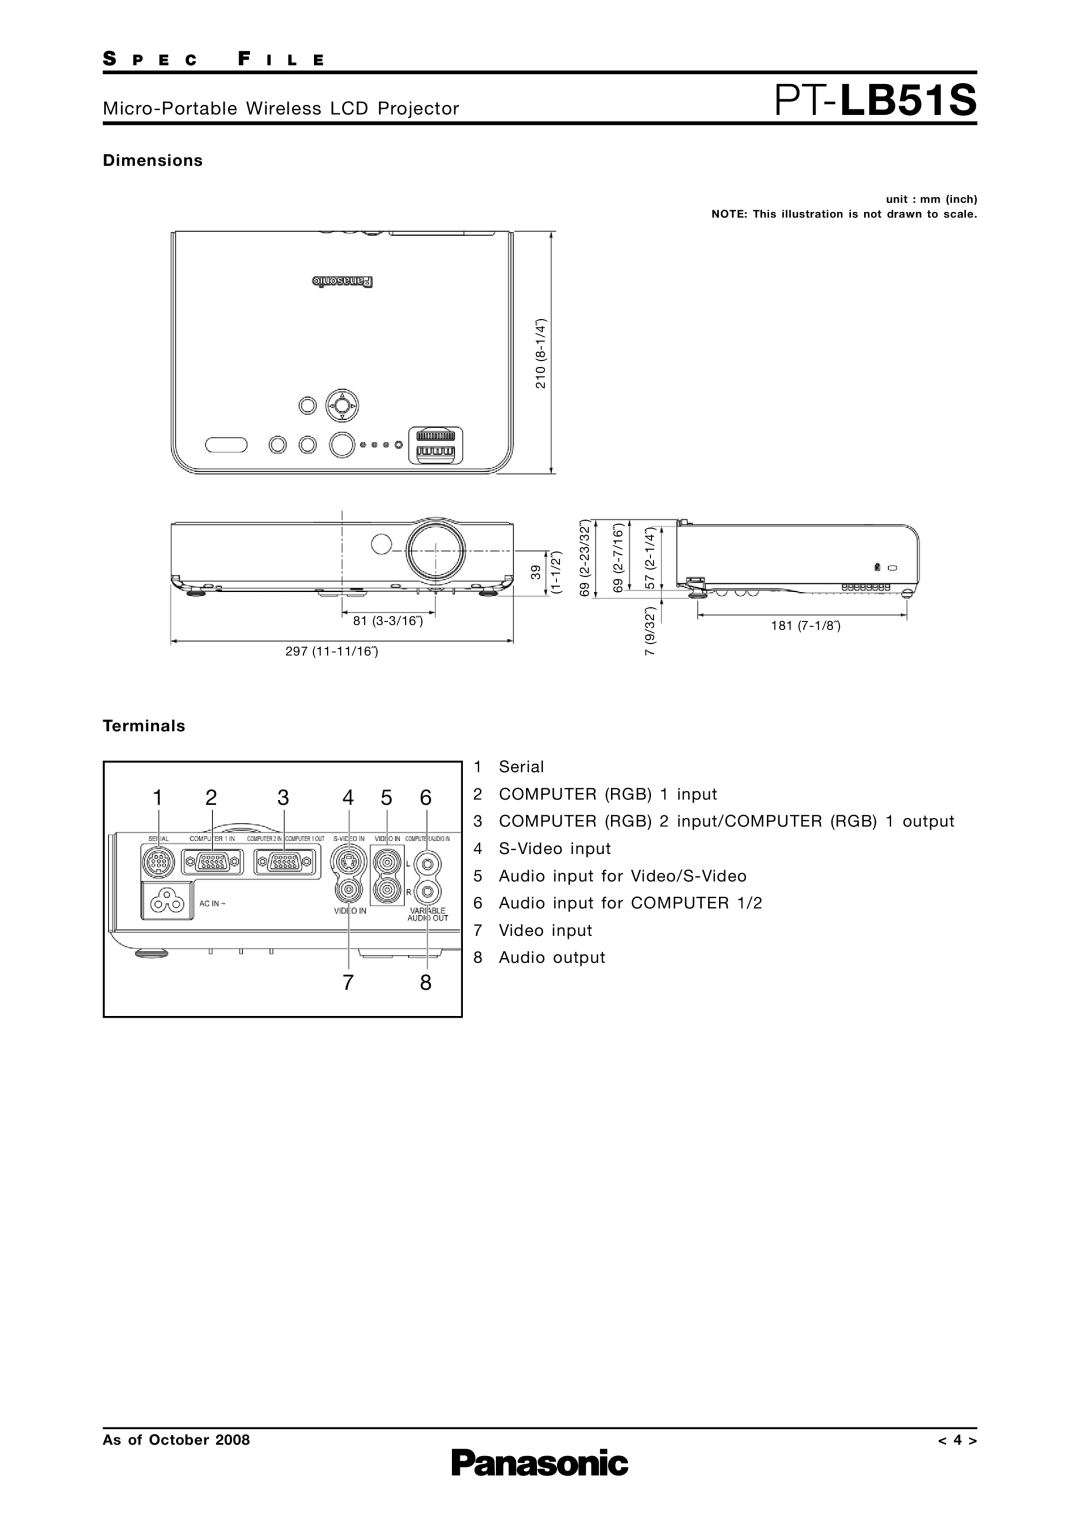 Panasonic PT-LB51S Dimensions, Terminals, Micro-Portable Wireless LCD Projector, S P E C F I L E, As of October 